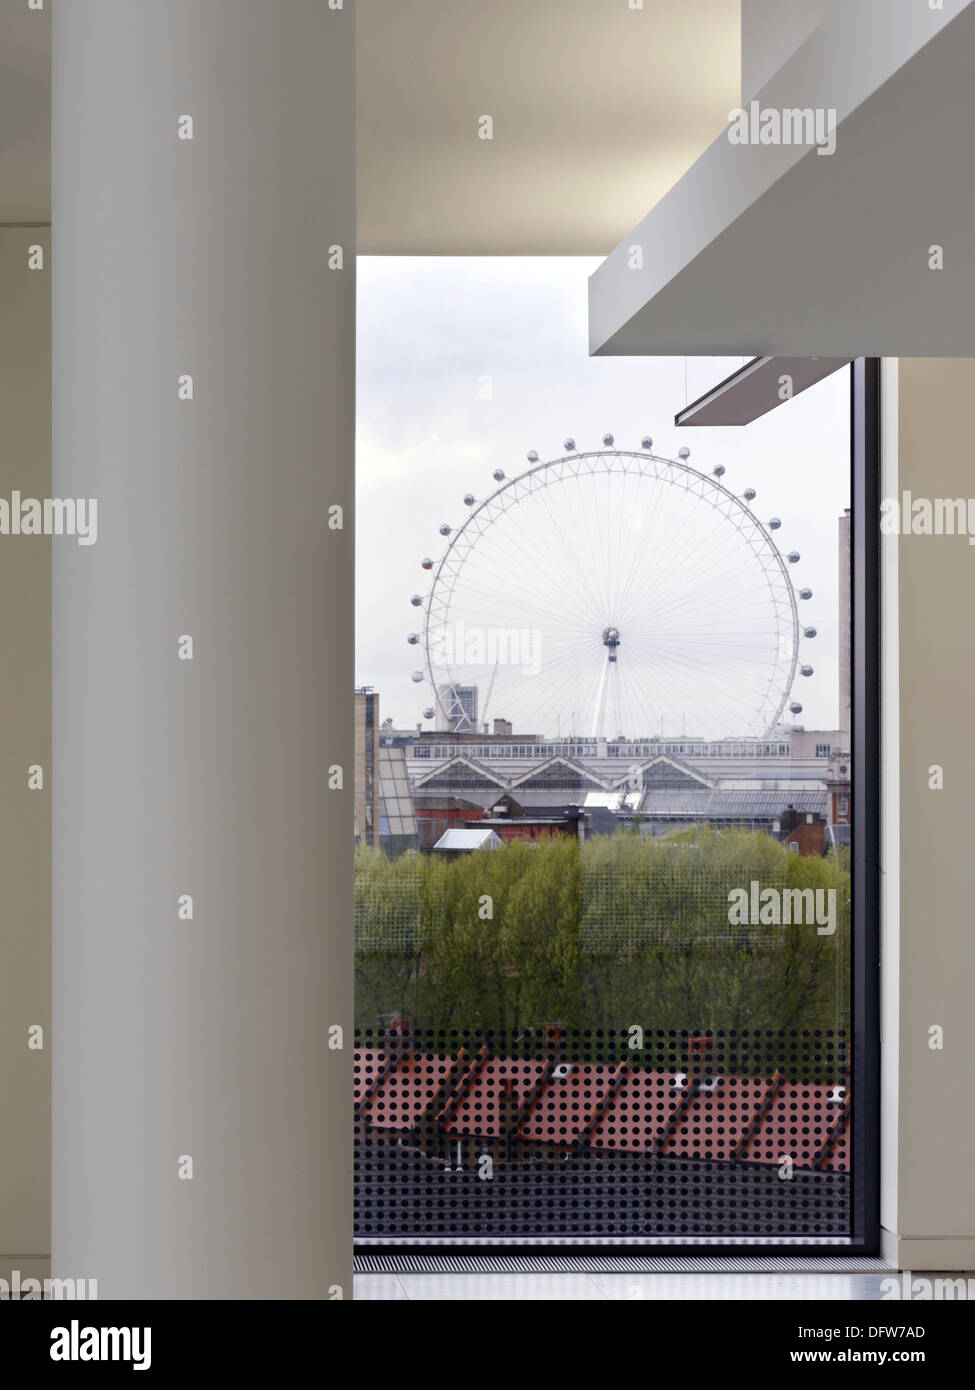 One Valentine Place, London, United Kingdom. Architect: Stiff + Trevillion Architects, 2013. City view through office window. Stock Photo